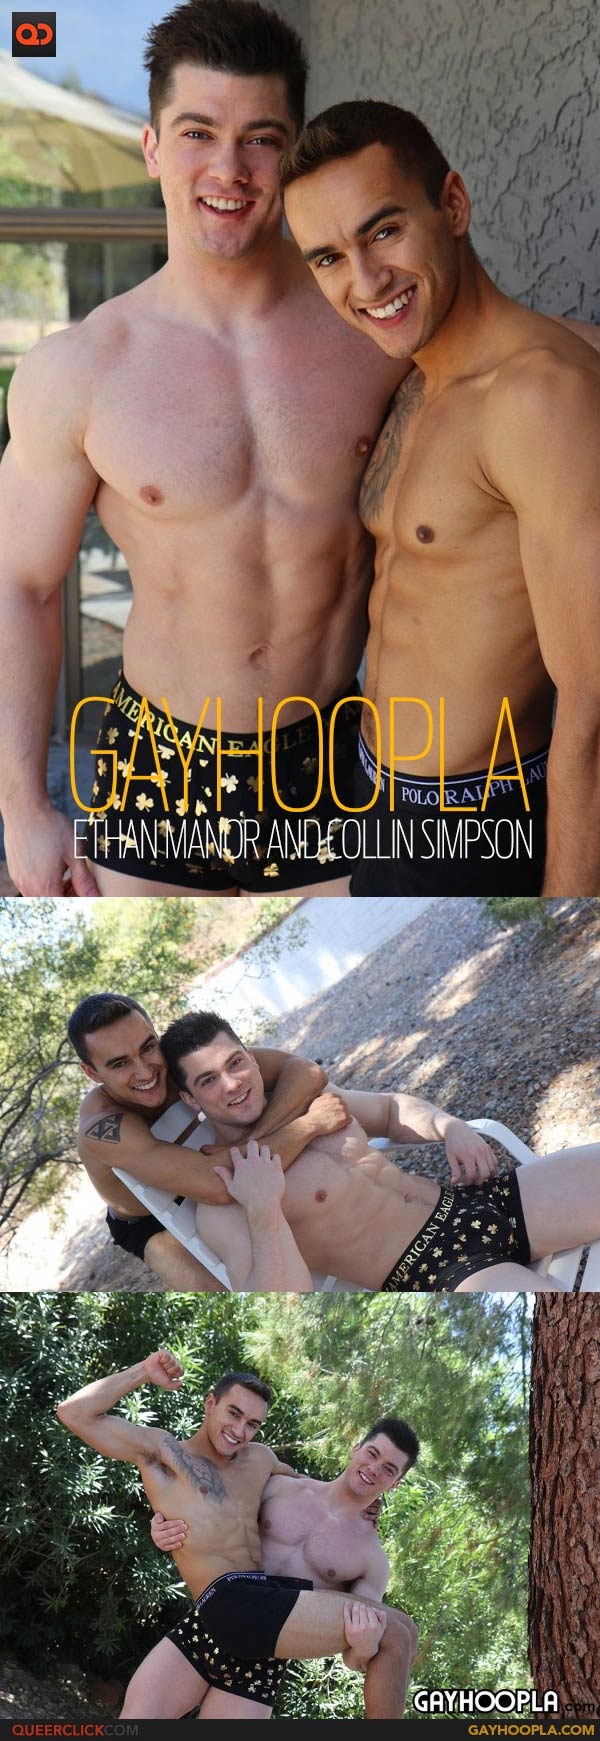 GayHoopla: Ethan Manor and Collin Simpson